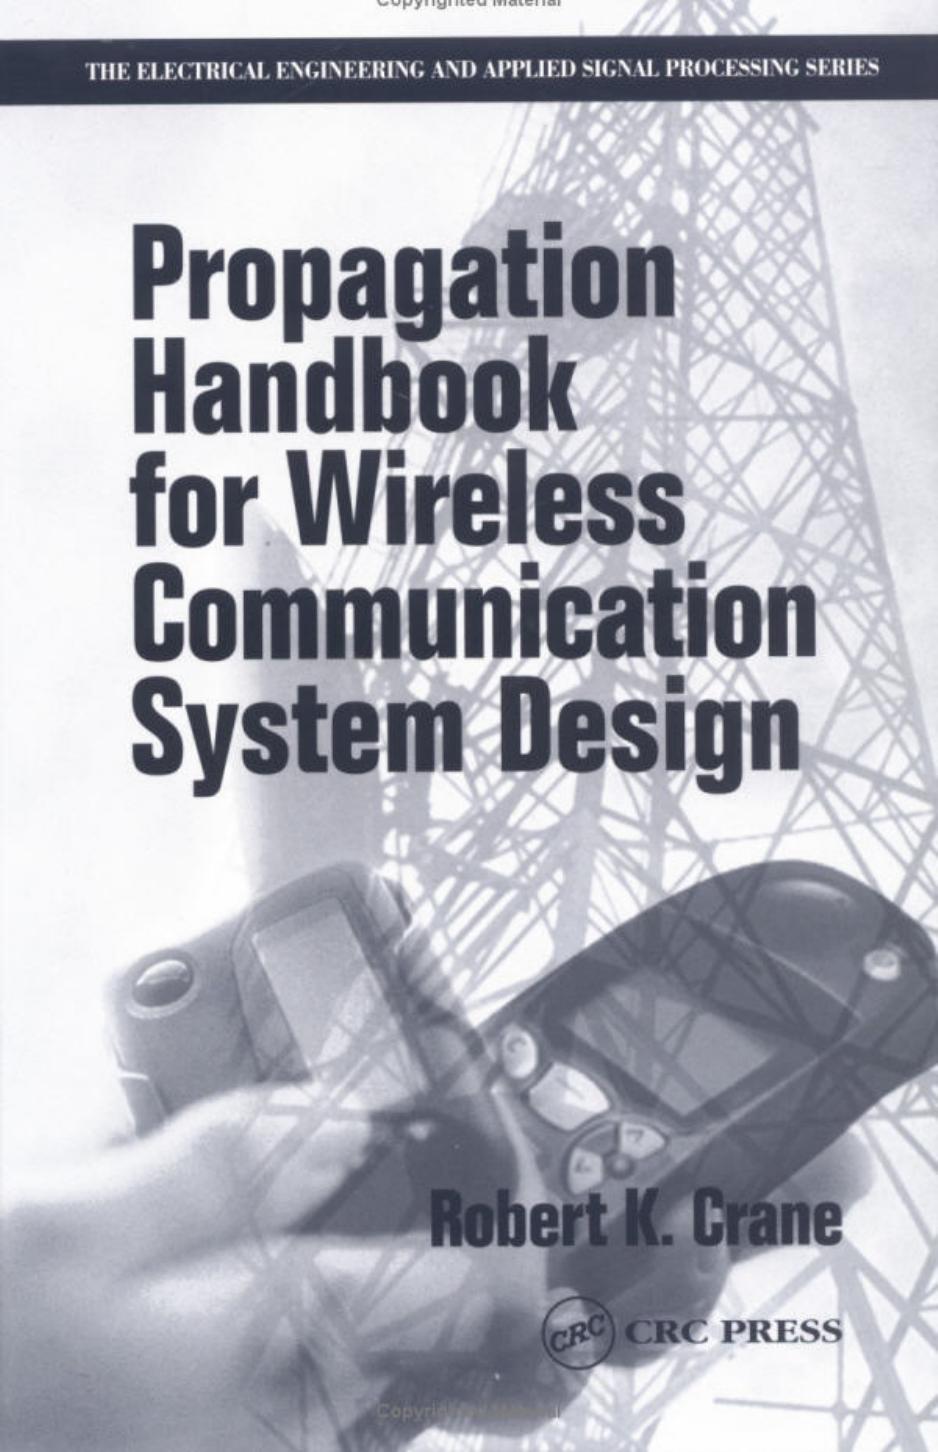 Propagation handbook for wireless 2003.pdf